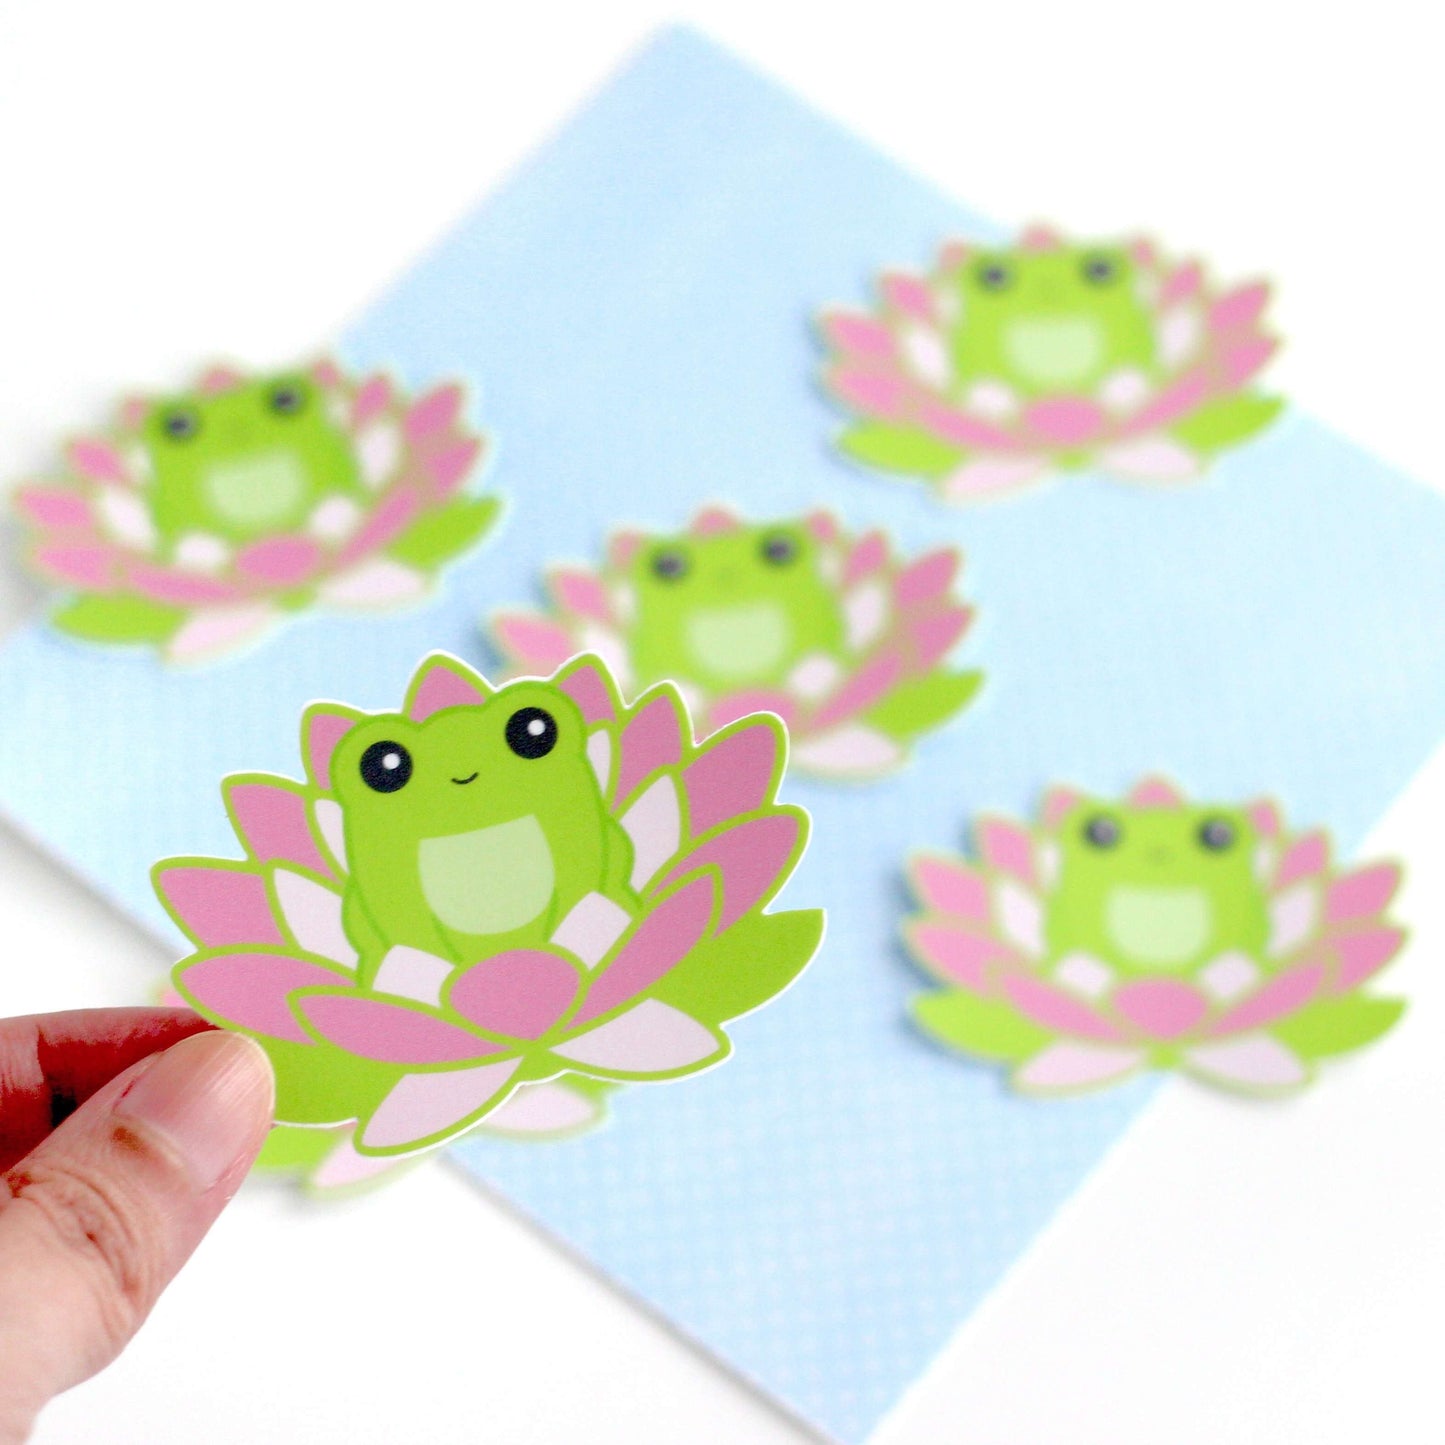 Frog in Lotus Flower Sticker - Cute Vinyl Sticker - Frog Stationery - Laptop Sticker by Wild Whimsy Woolies